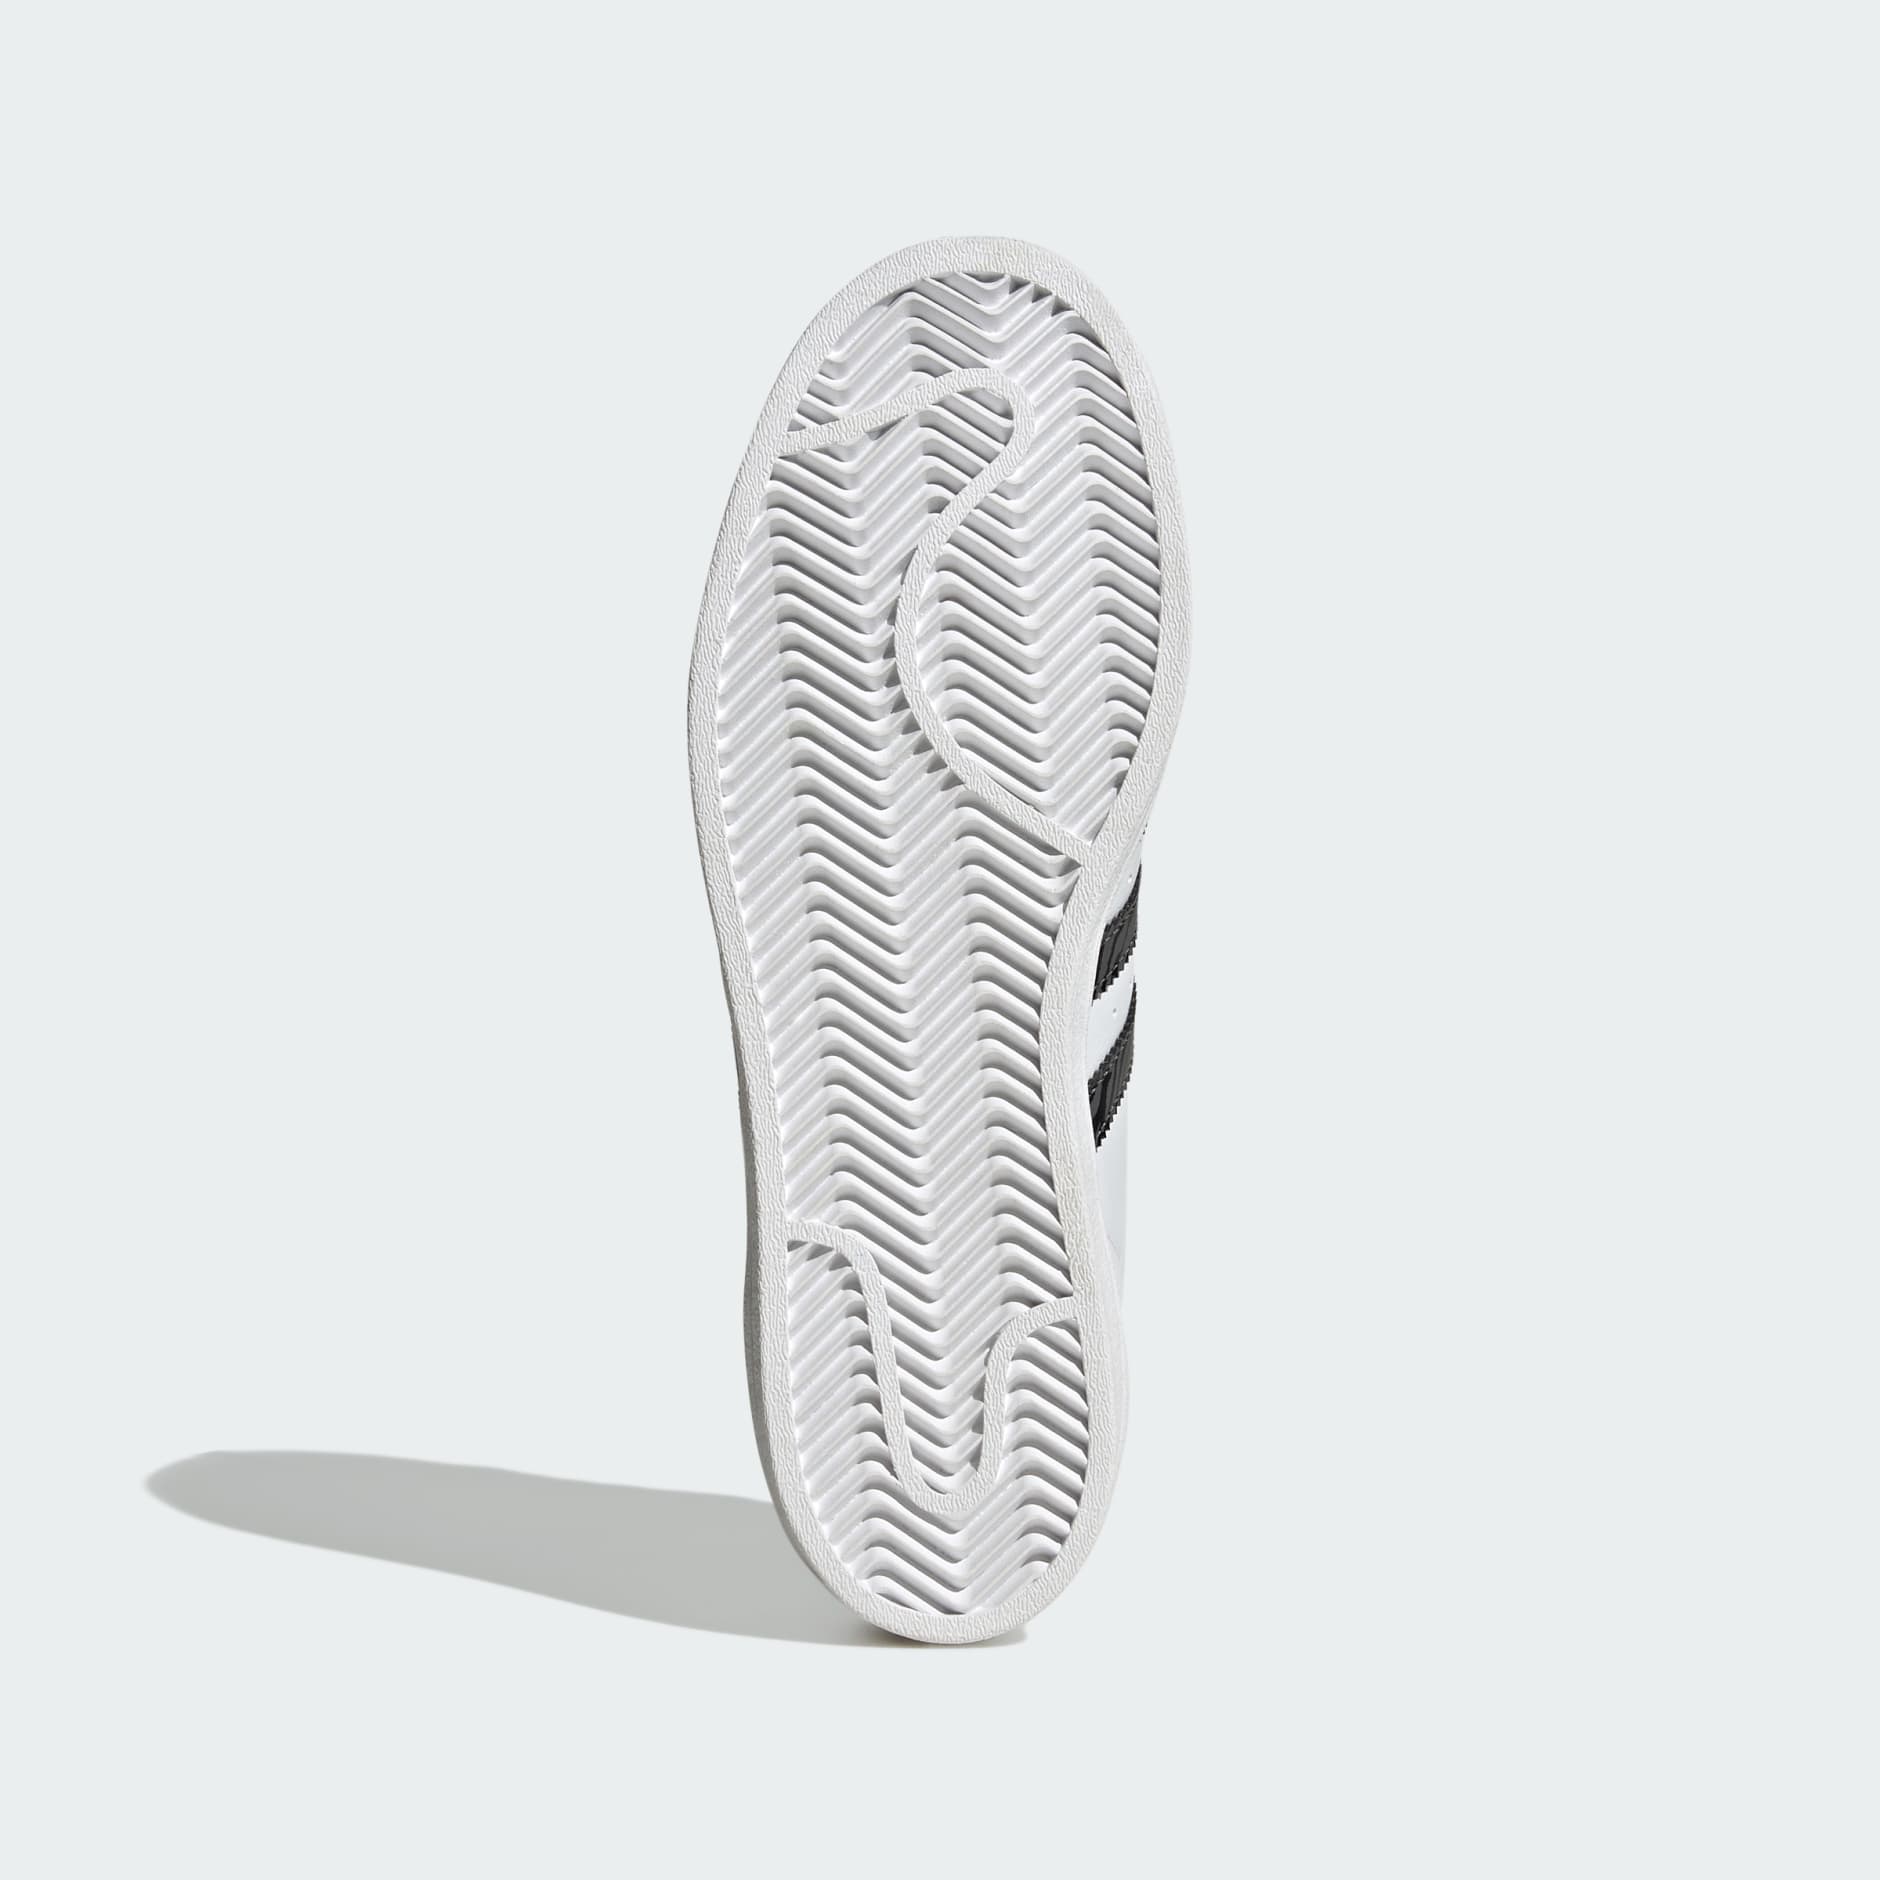 adidas Superstar Shoes - White | adidas UAE